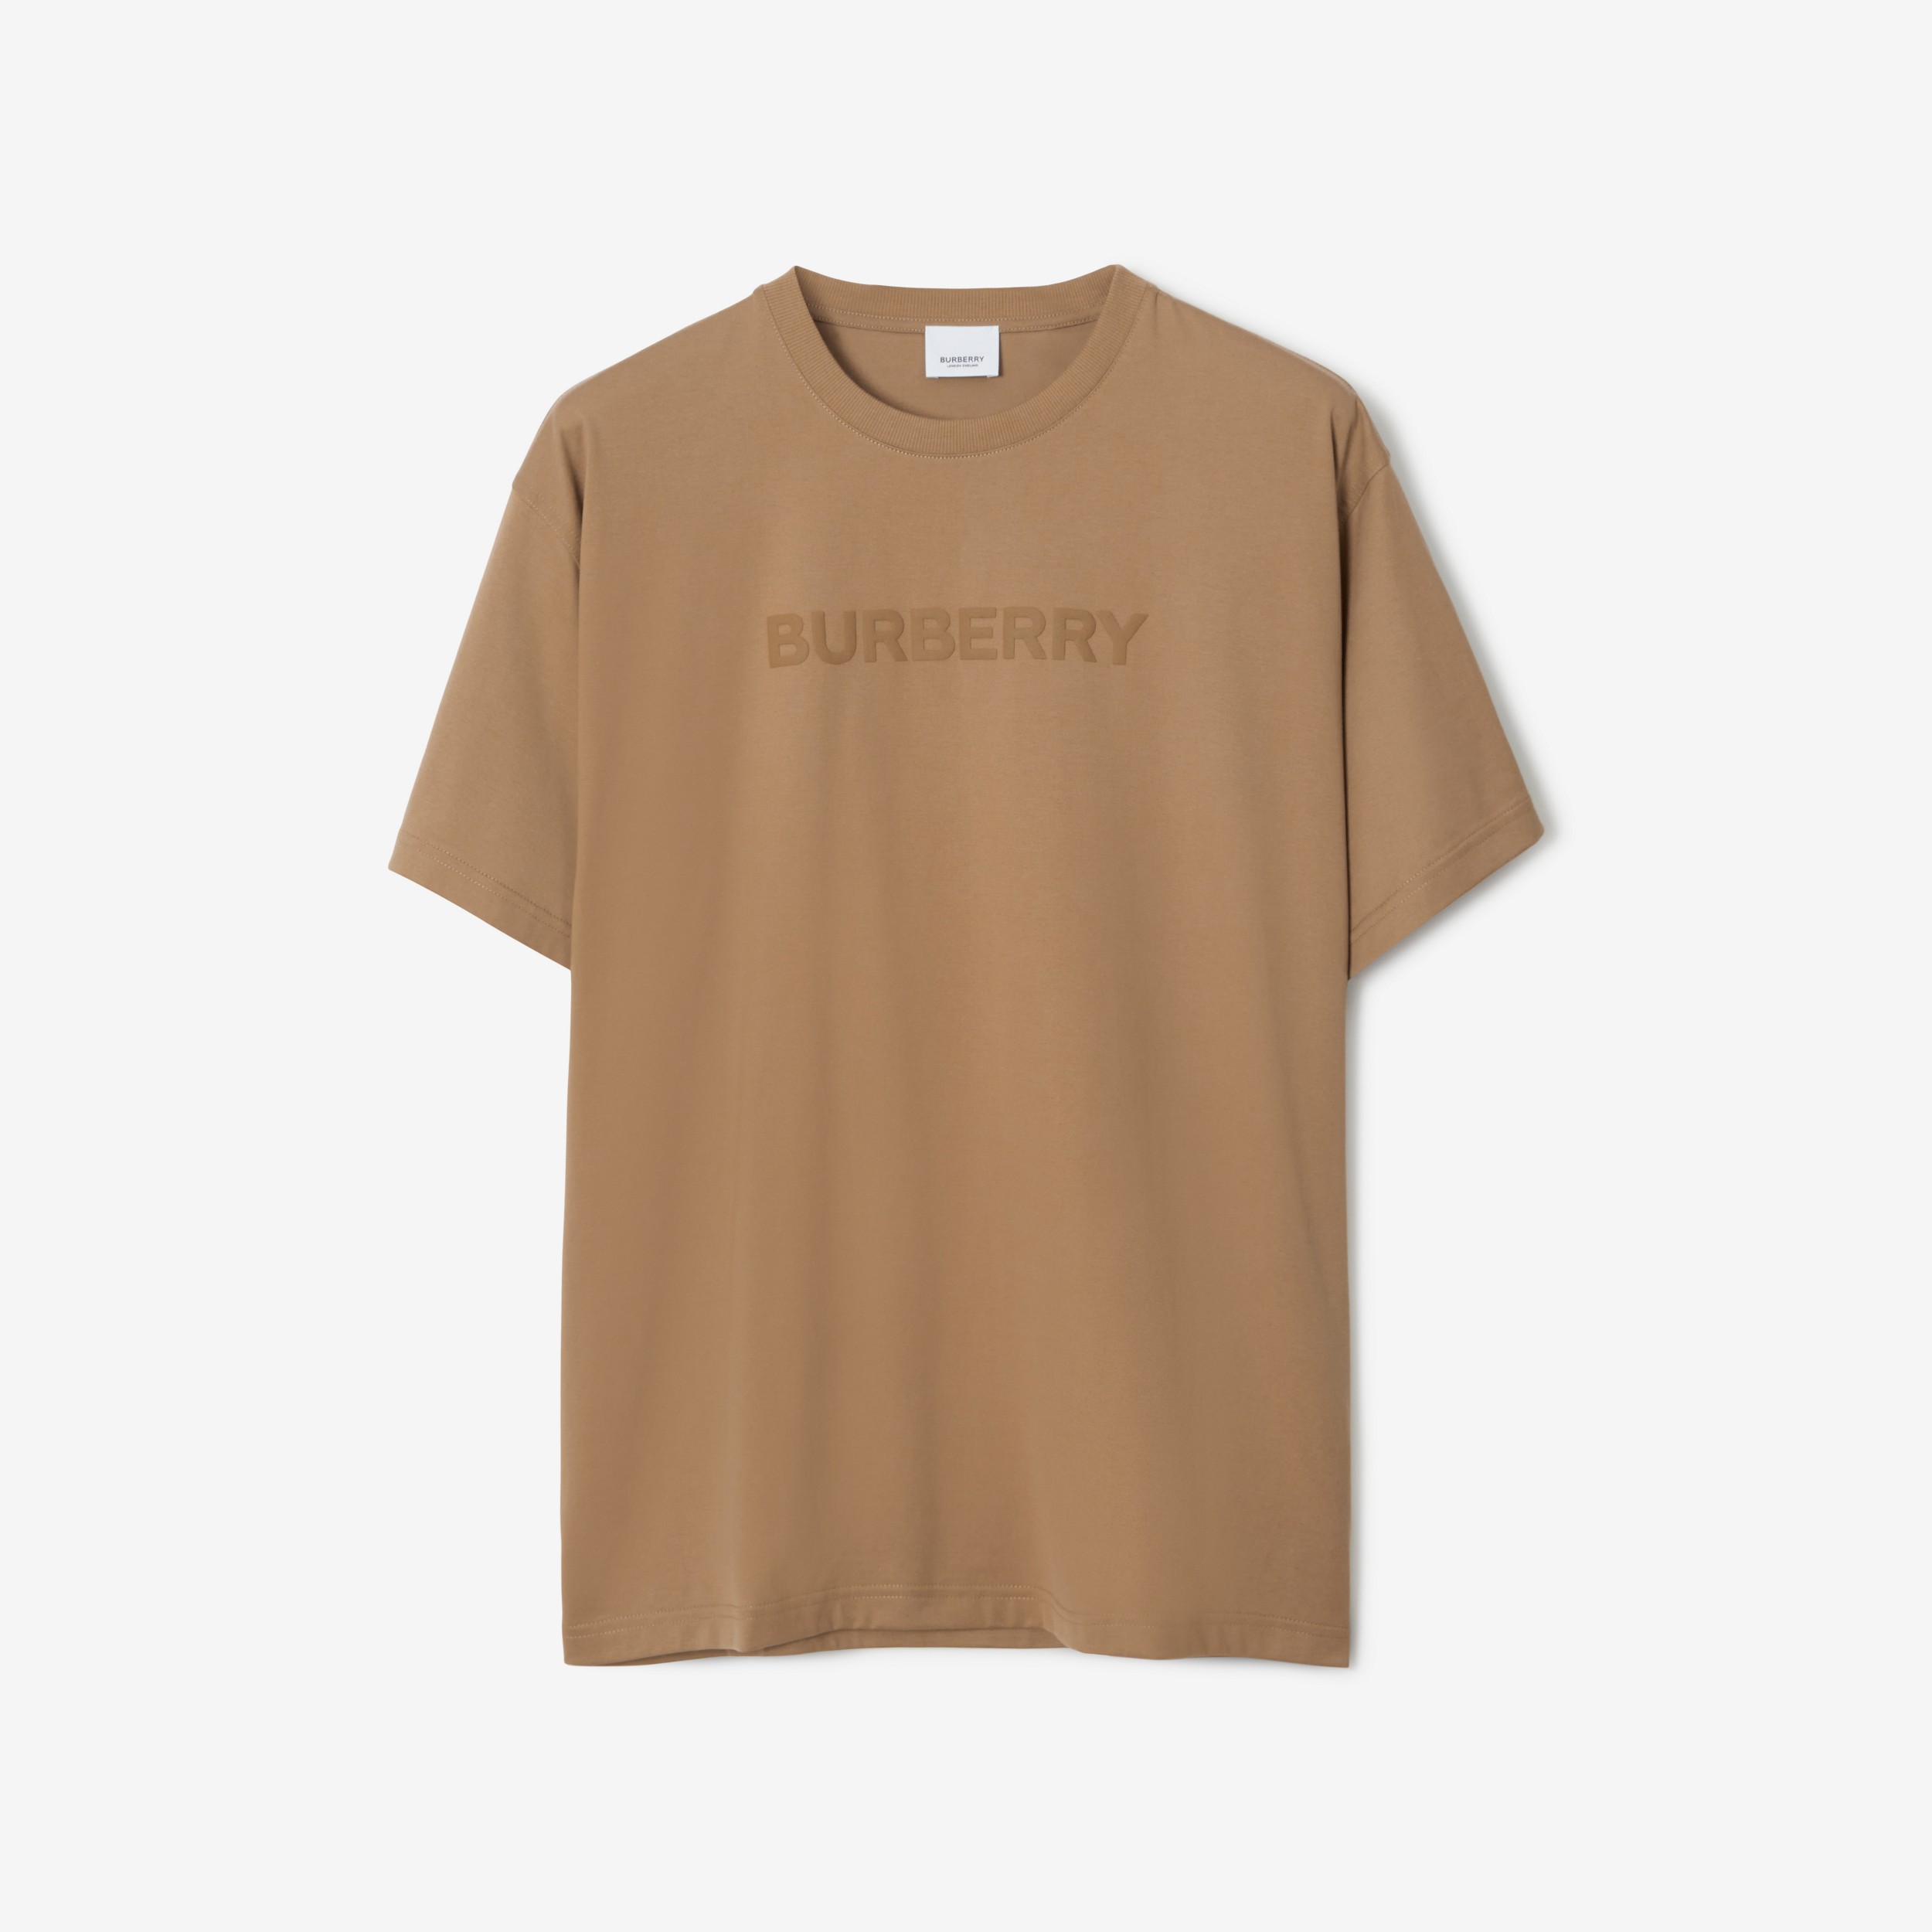 Baumwoll-T-Shirt in Oversize-Passform mit Burberry-Logo (Camelfarben) - Herren | Burberry® - 1